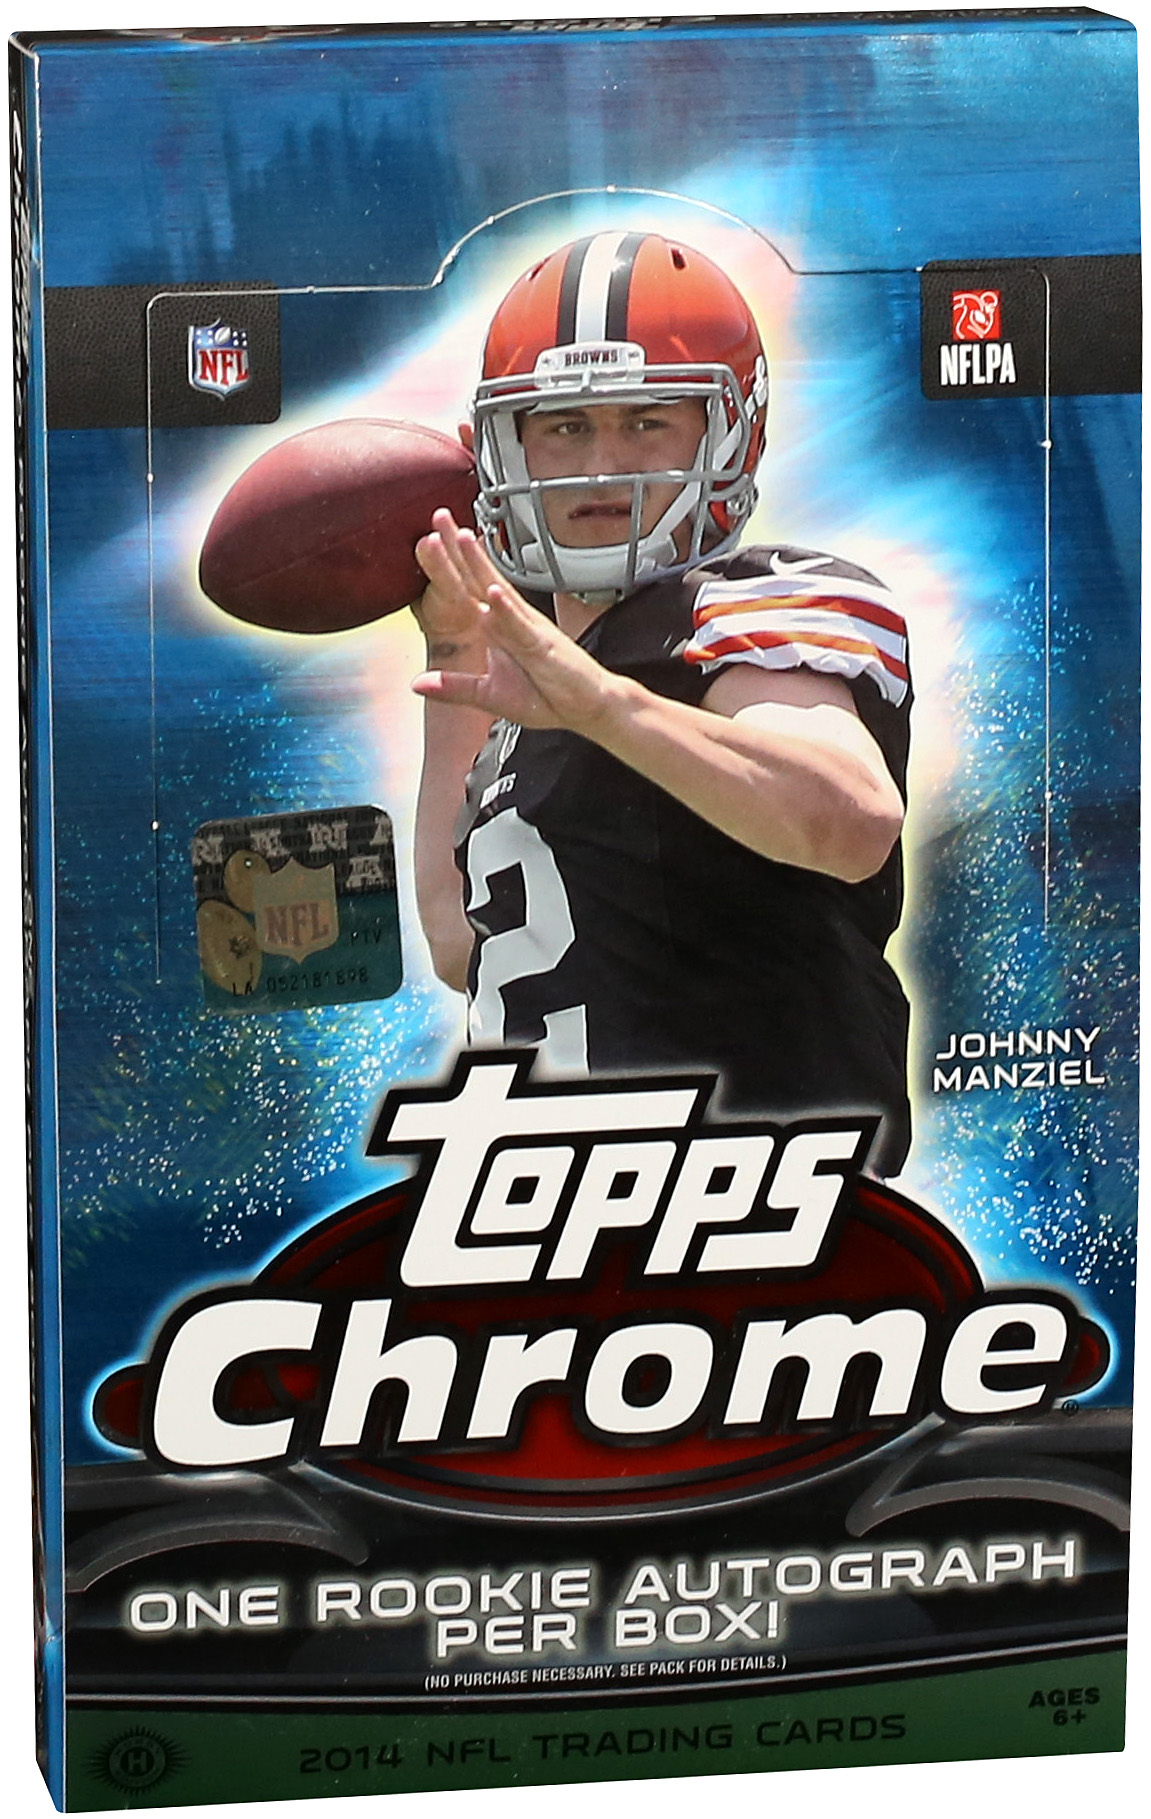 2014 Topps Chrome Football Hobby Box card image